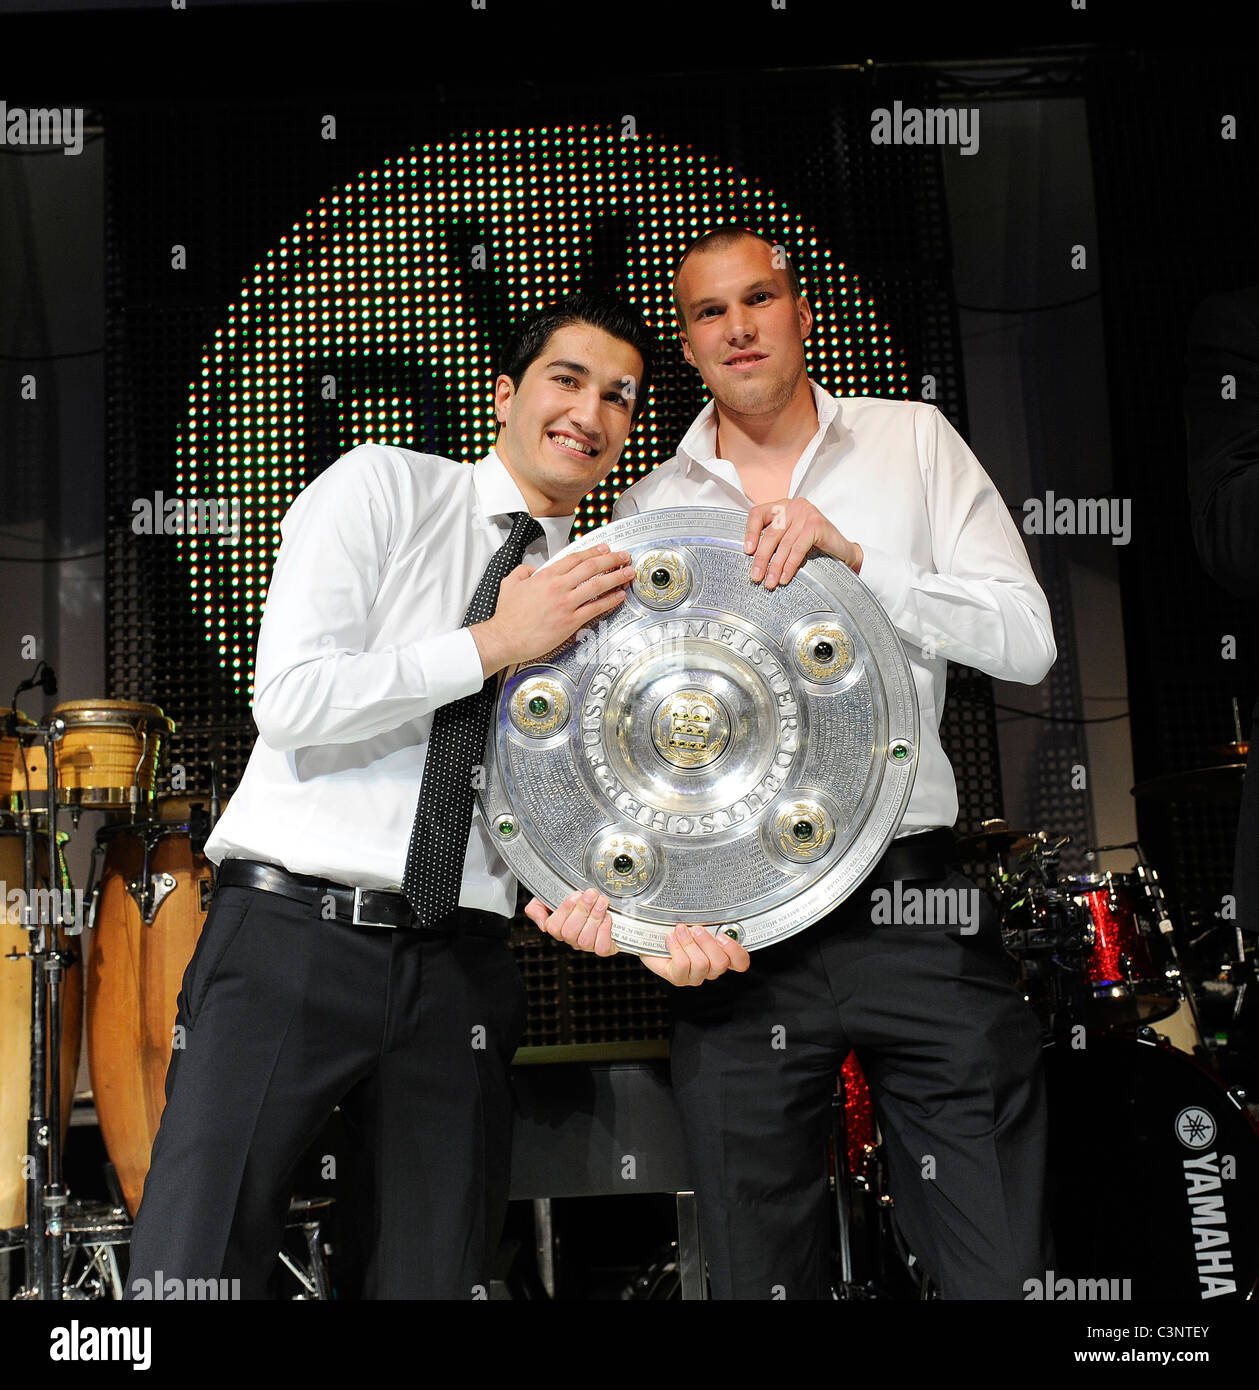 players of german football club Borussia Dortmund, Nuri Sahin (left) and Kevin Grosskreutz with championship trophy Stock Photo